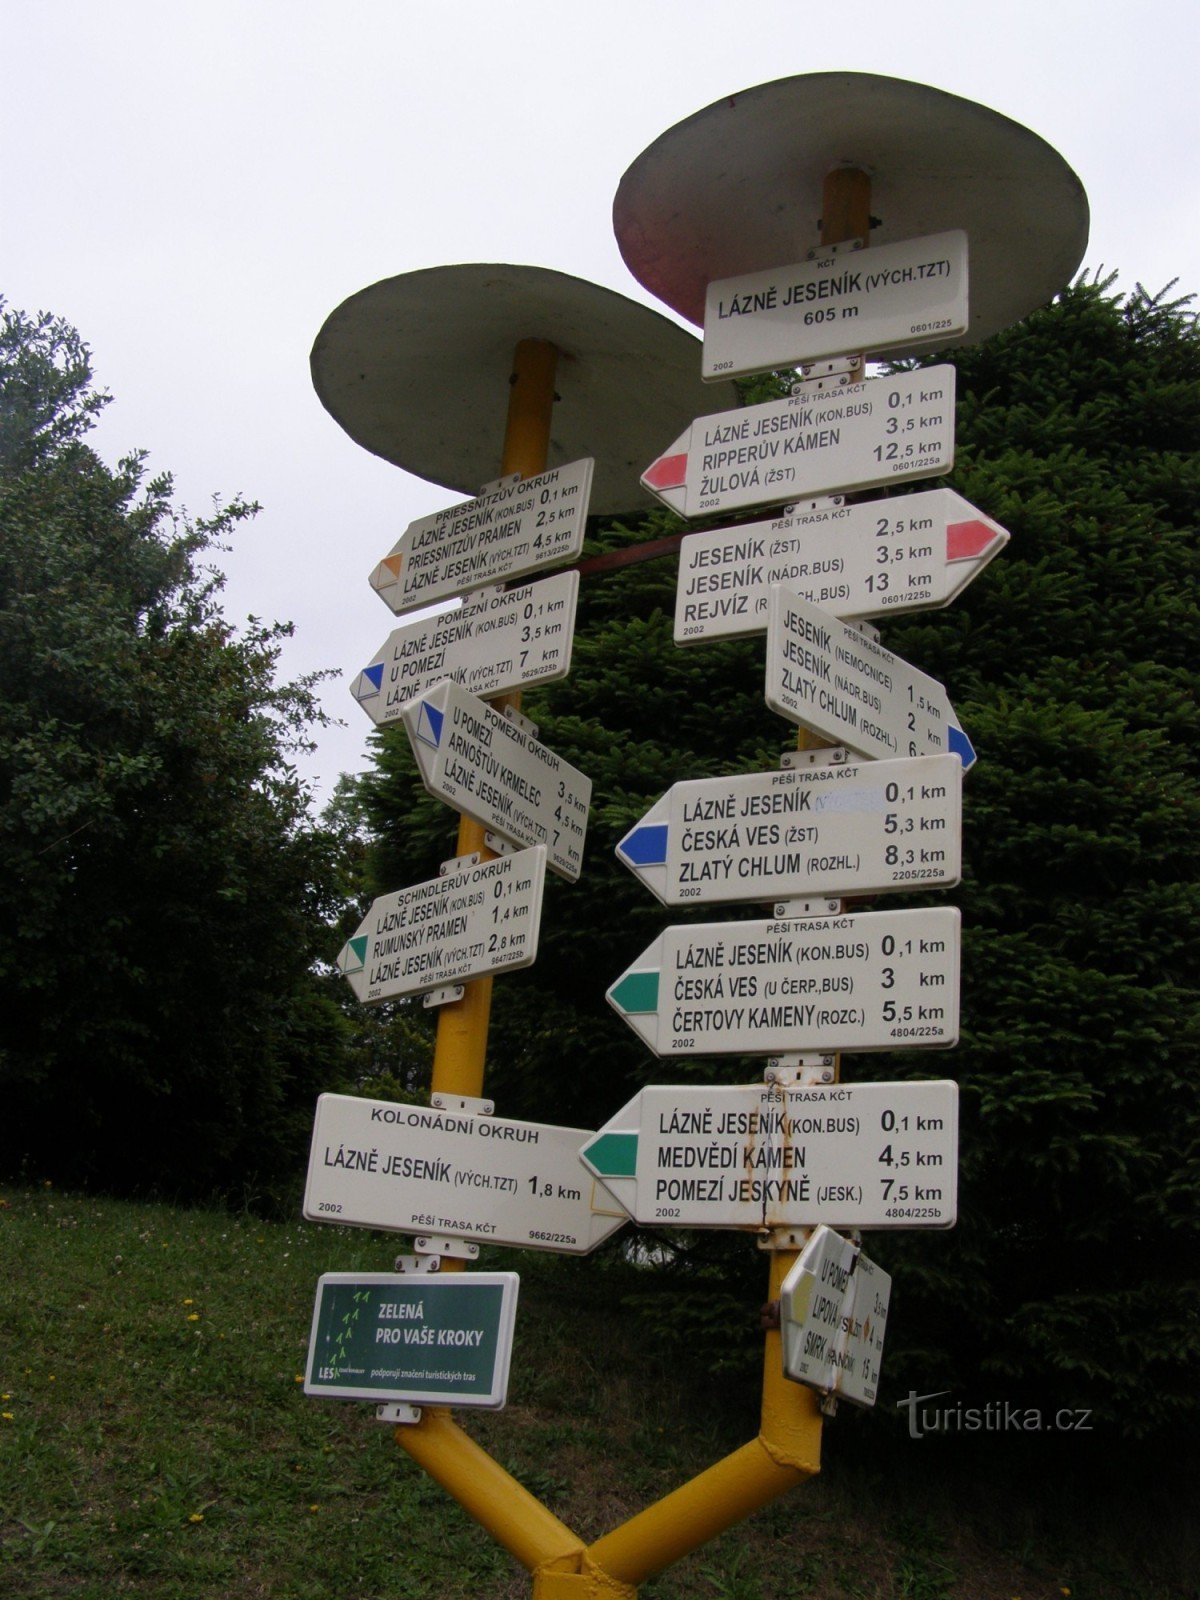 Spa Jeseník - la principal señal turística